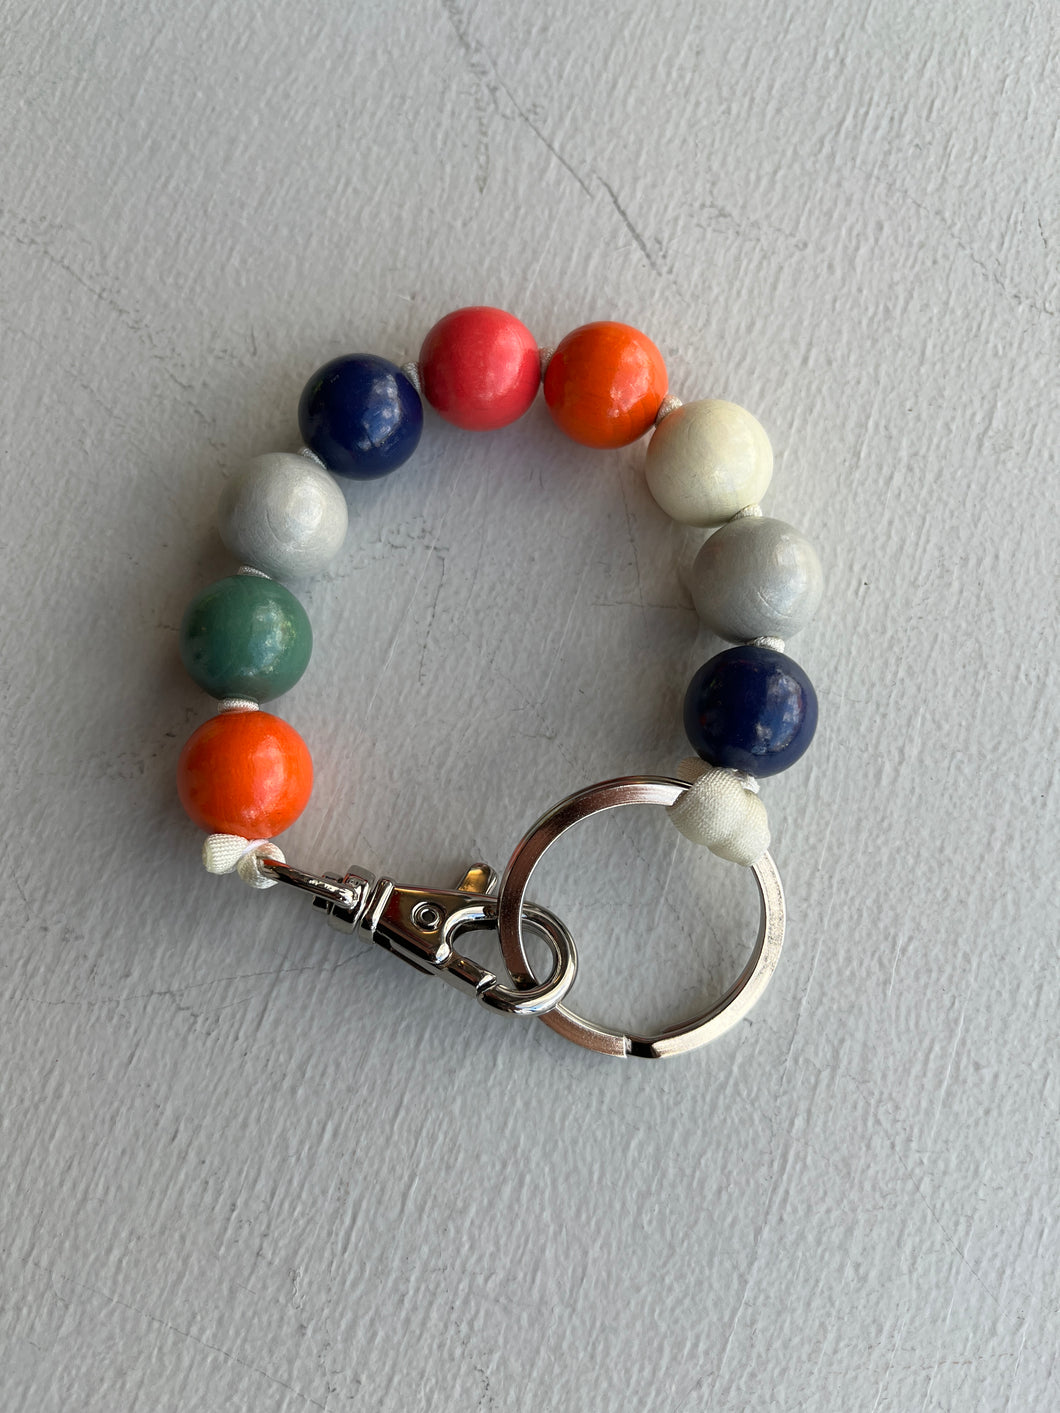 ina seifart - BIG Perlen Short Keyholder - retromix (green/grey/orange/red/navy) beads, white ribbon